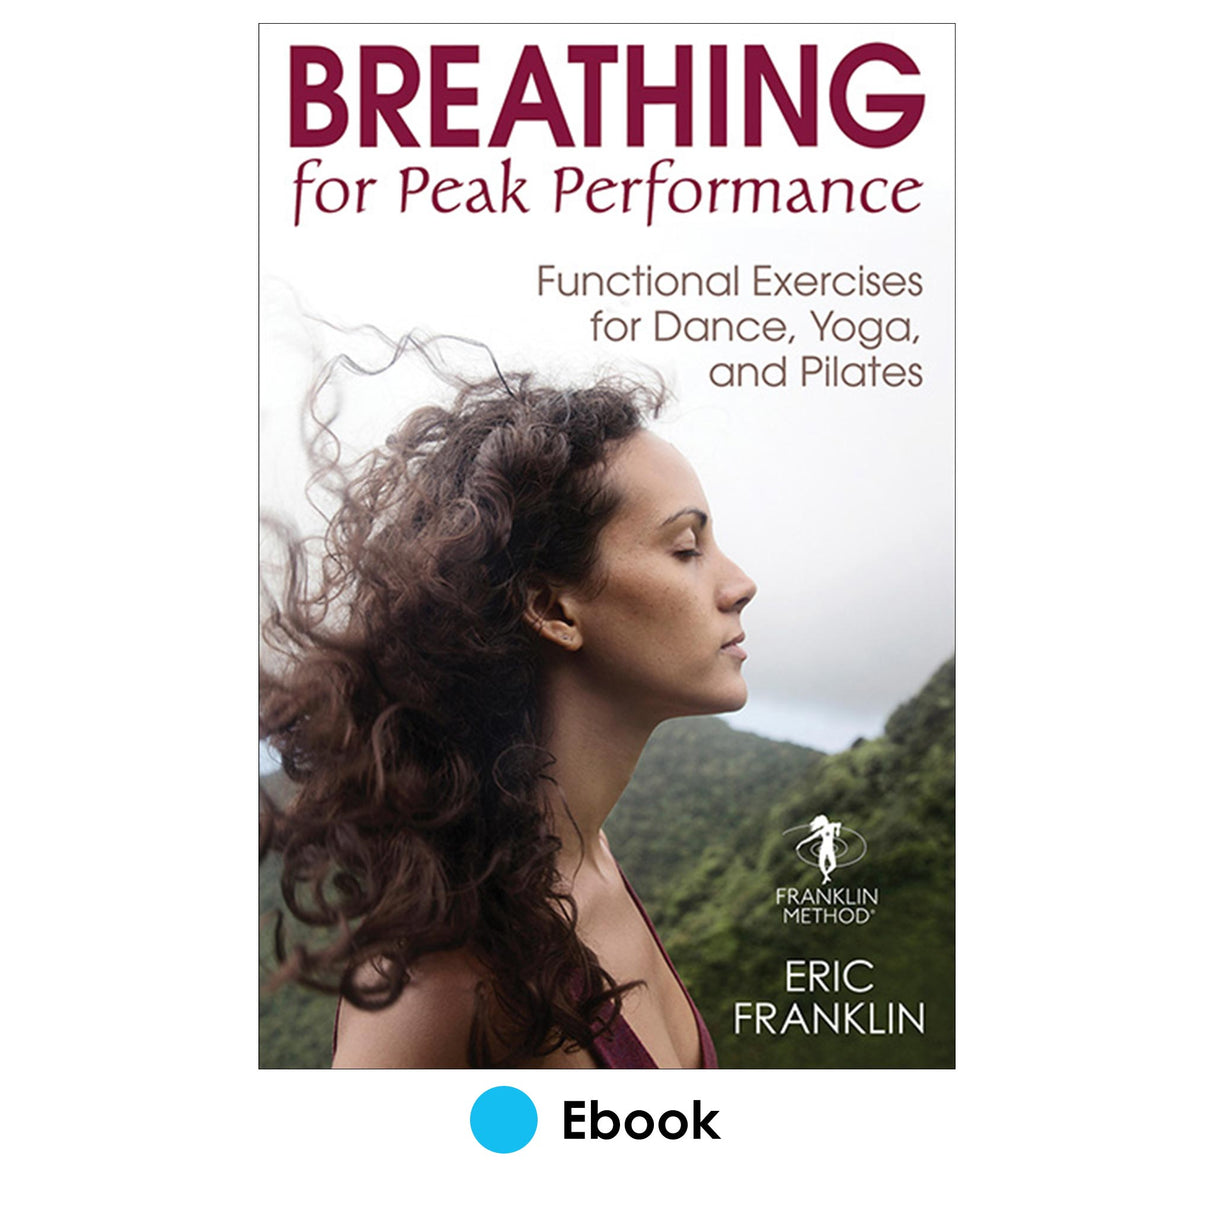 Breathing for Peak Performance epub